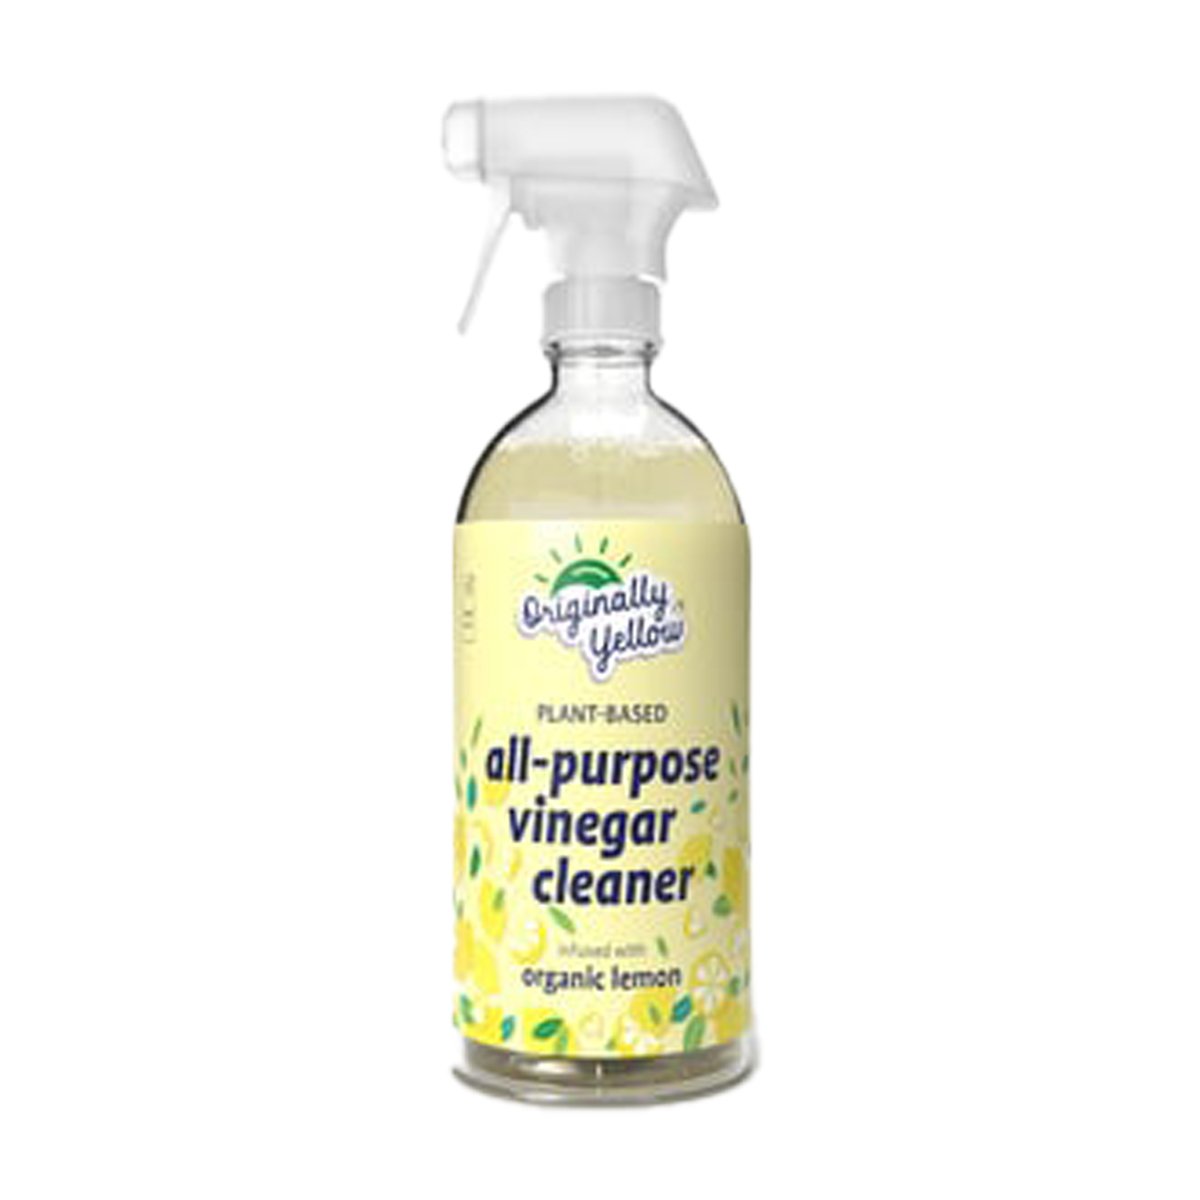 Originally Yellow Plant Based Organic Lemon All Purpose Vinegar Cleaner Spray 470ml